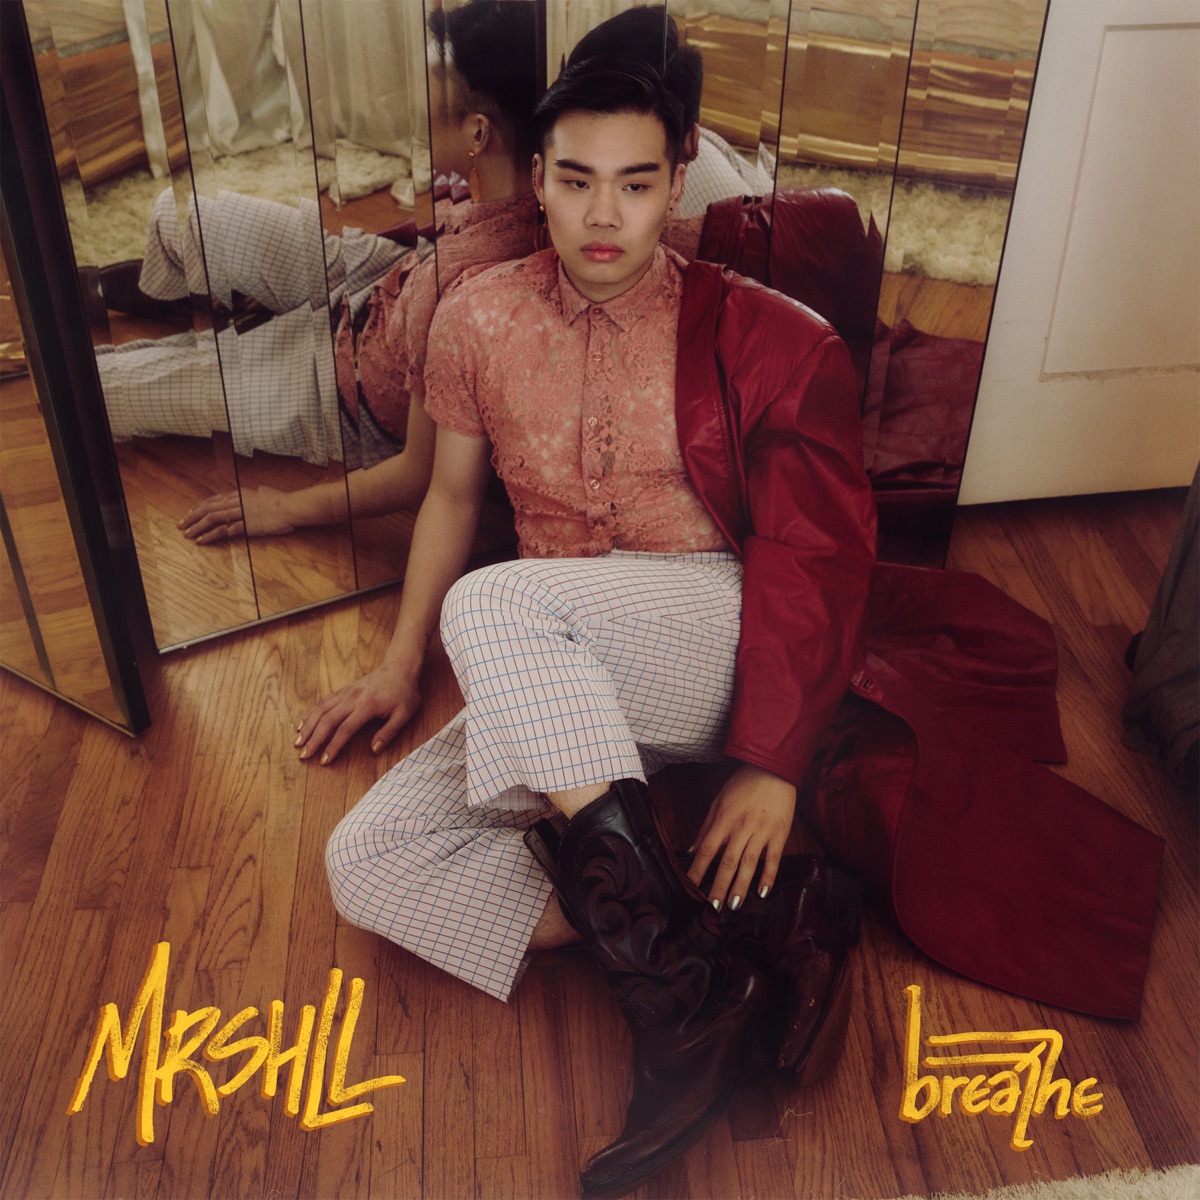 MRSHLL – breathe – EP